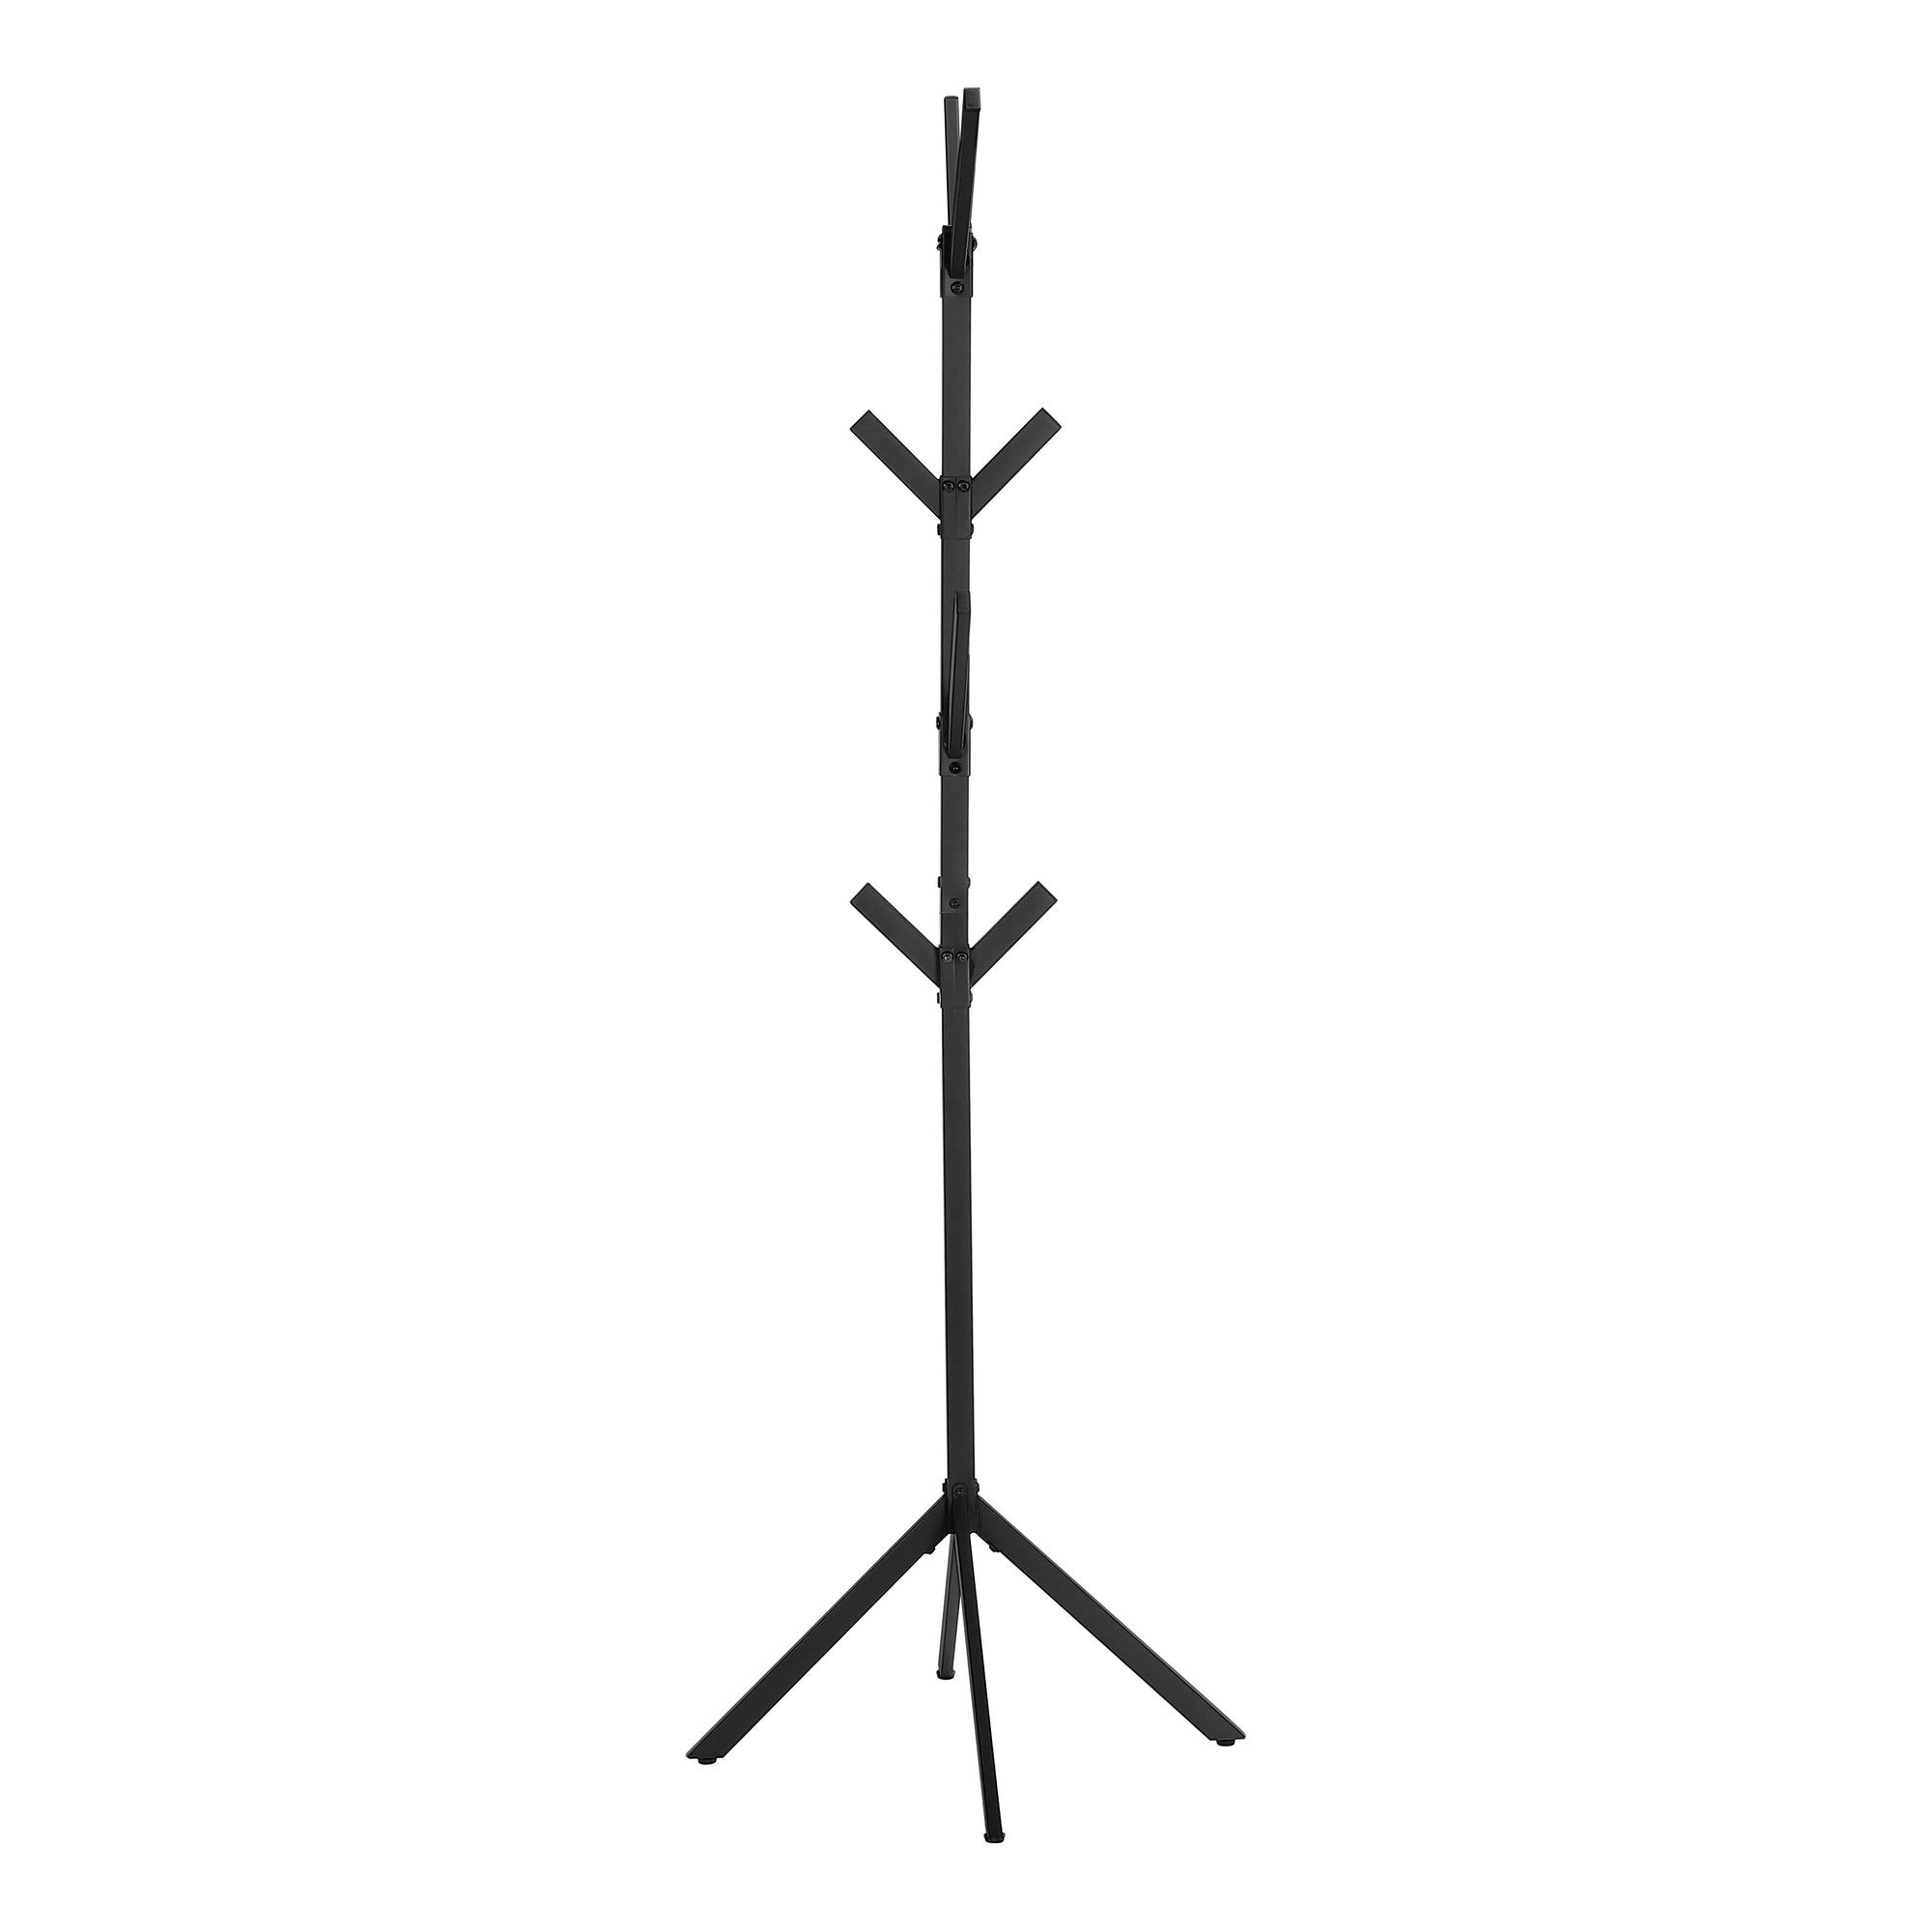 MN-702057    Coat Rack, Hall Tree, Free Standing, 8 Hooks, Entryway, 70"H, Metal, Black, Contemporary, Modern